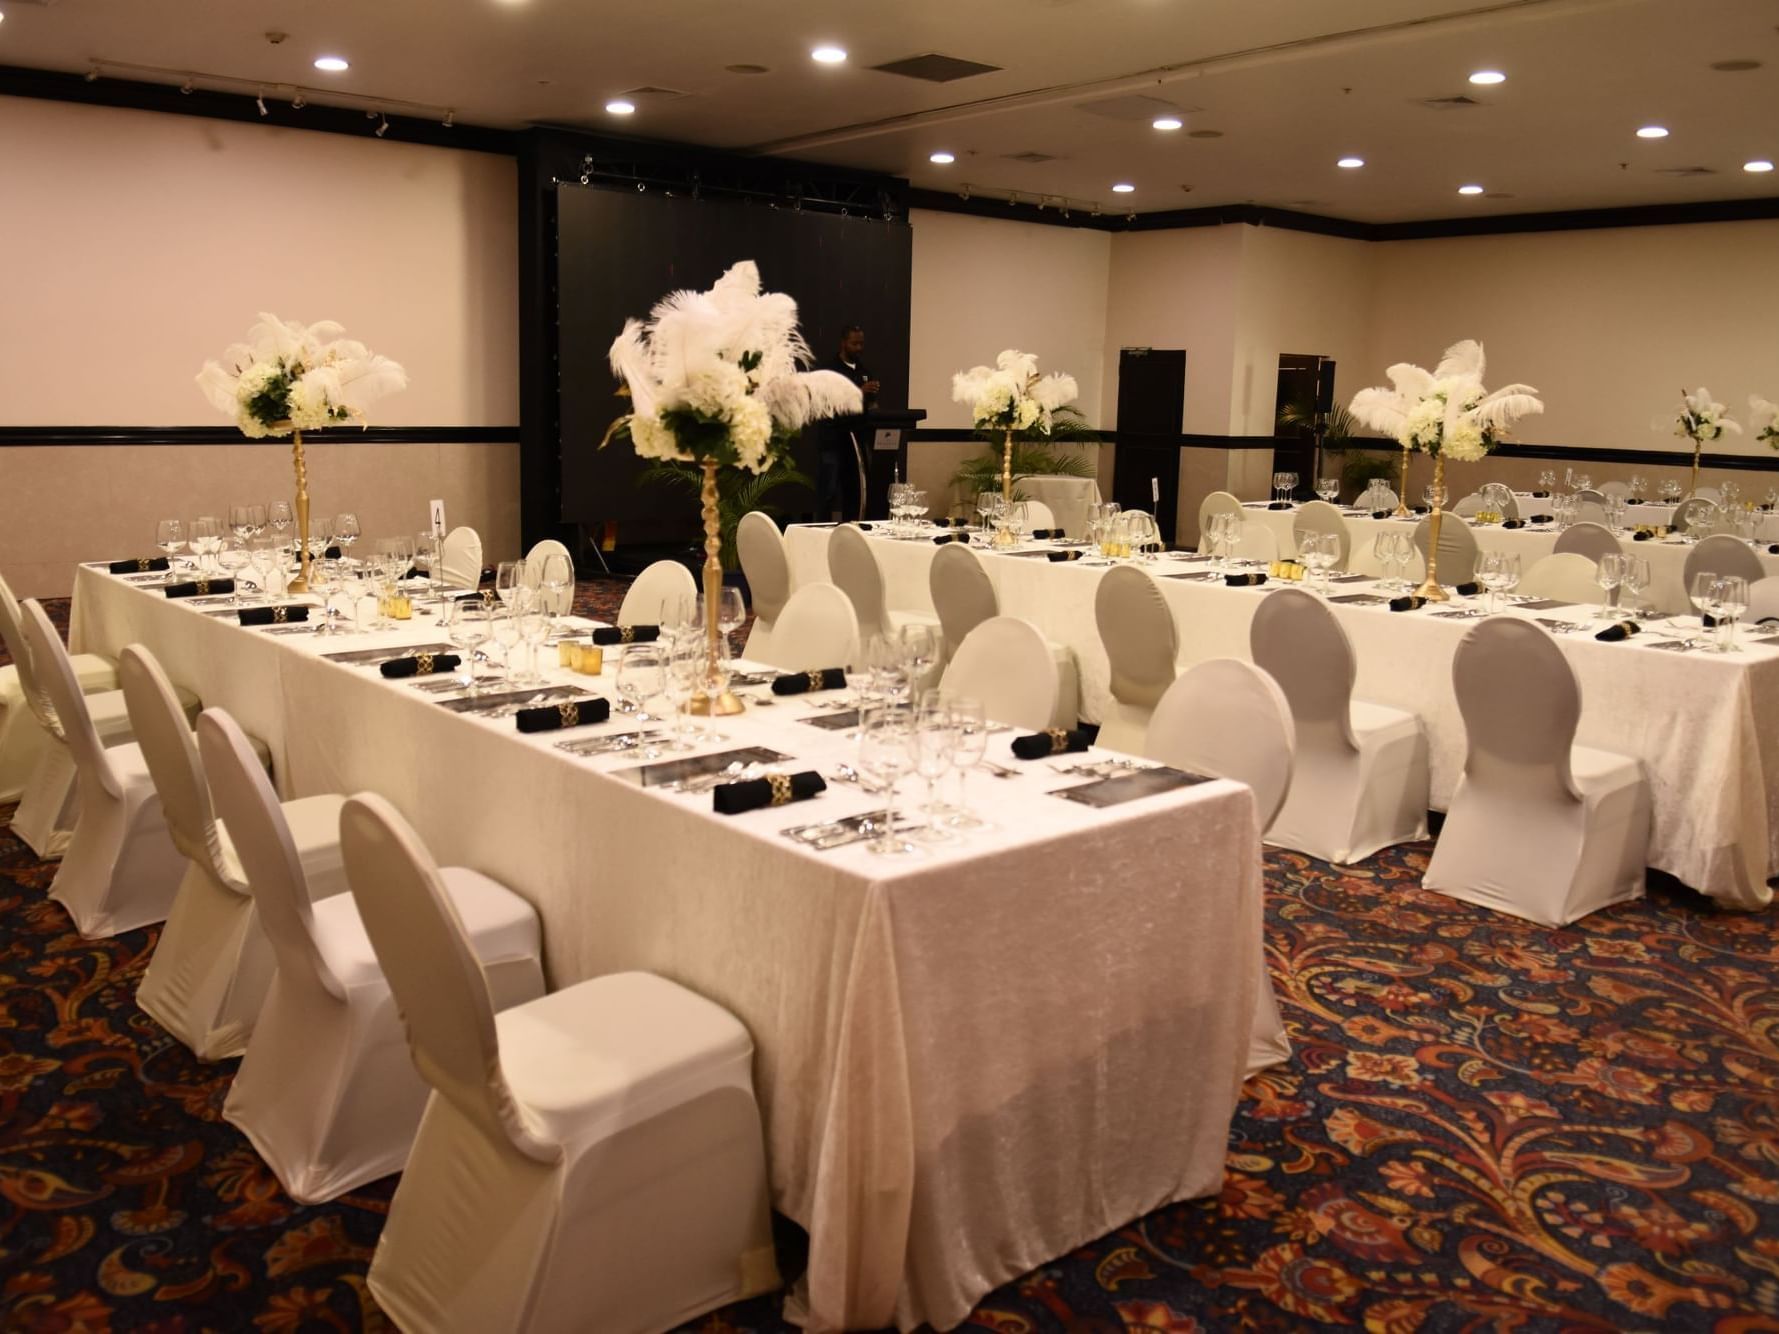 Table arrangement with flower décor in Legacy Suite at Jamaica Pegasus Hotel